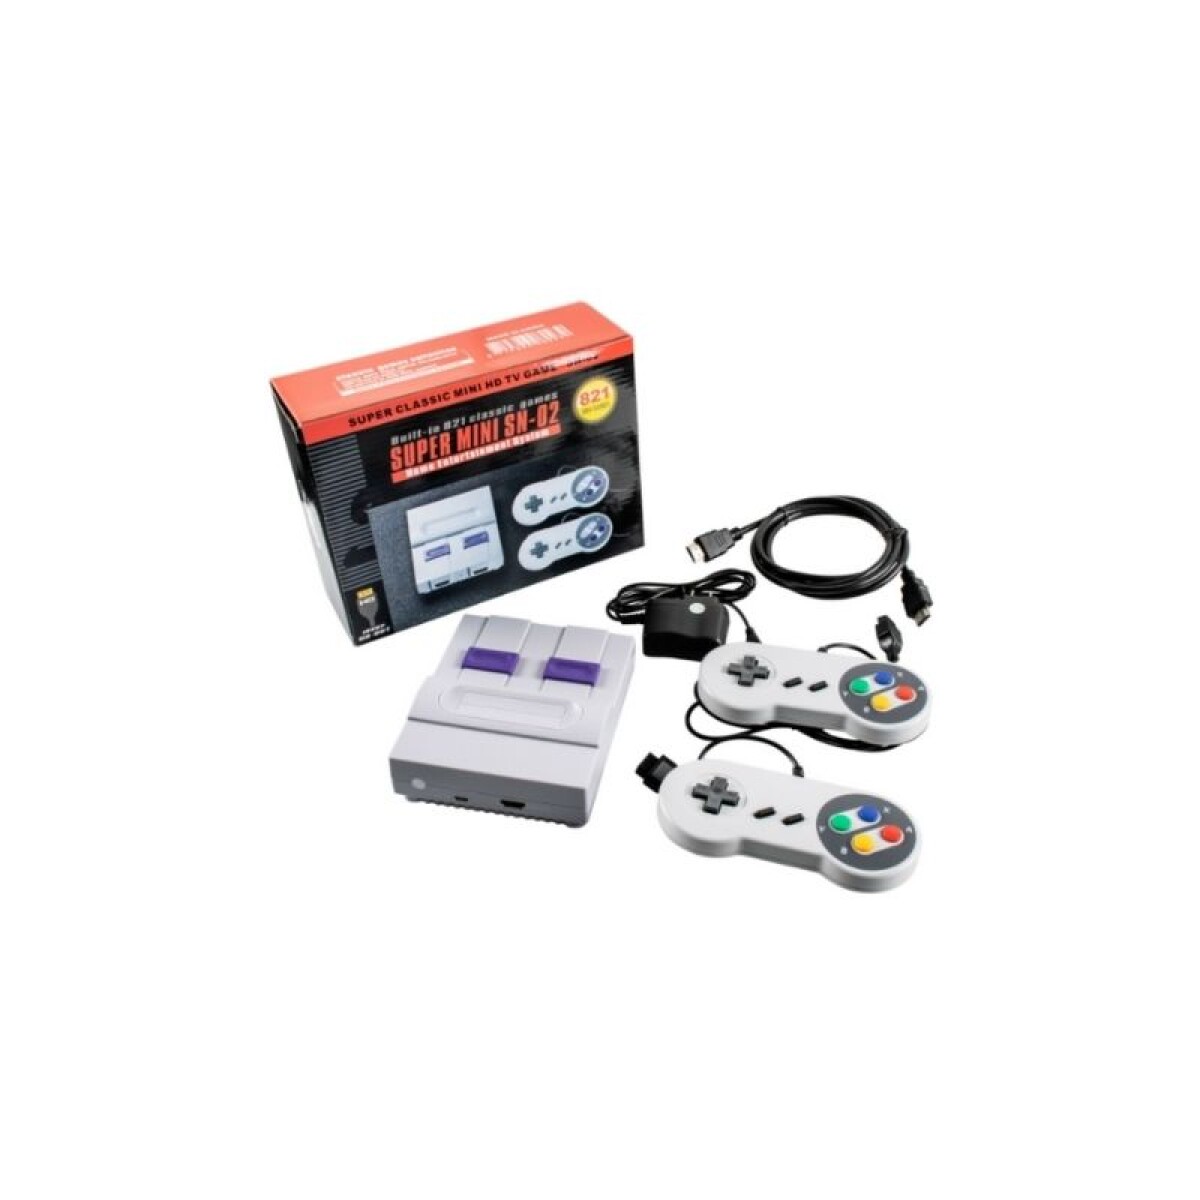 Consola Arcade Super Mini con 821 juegos 